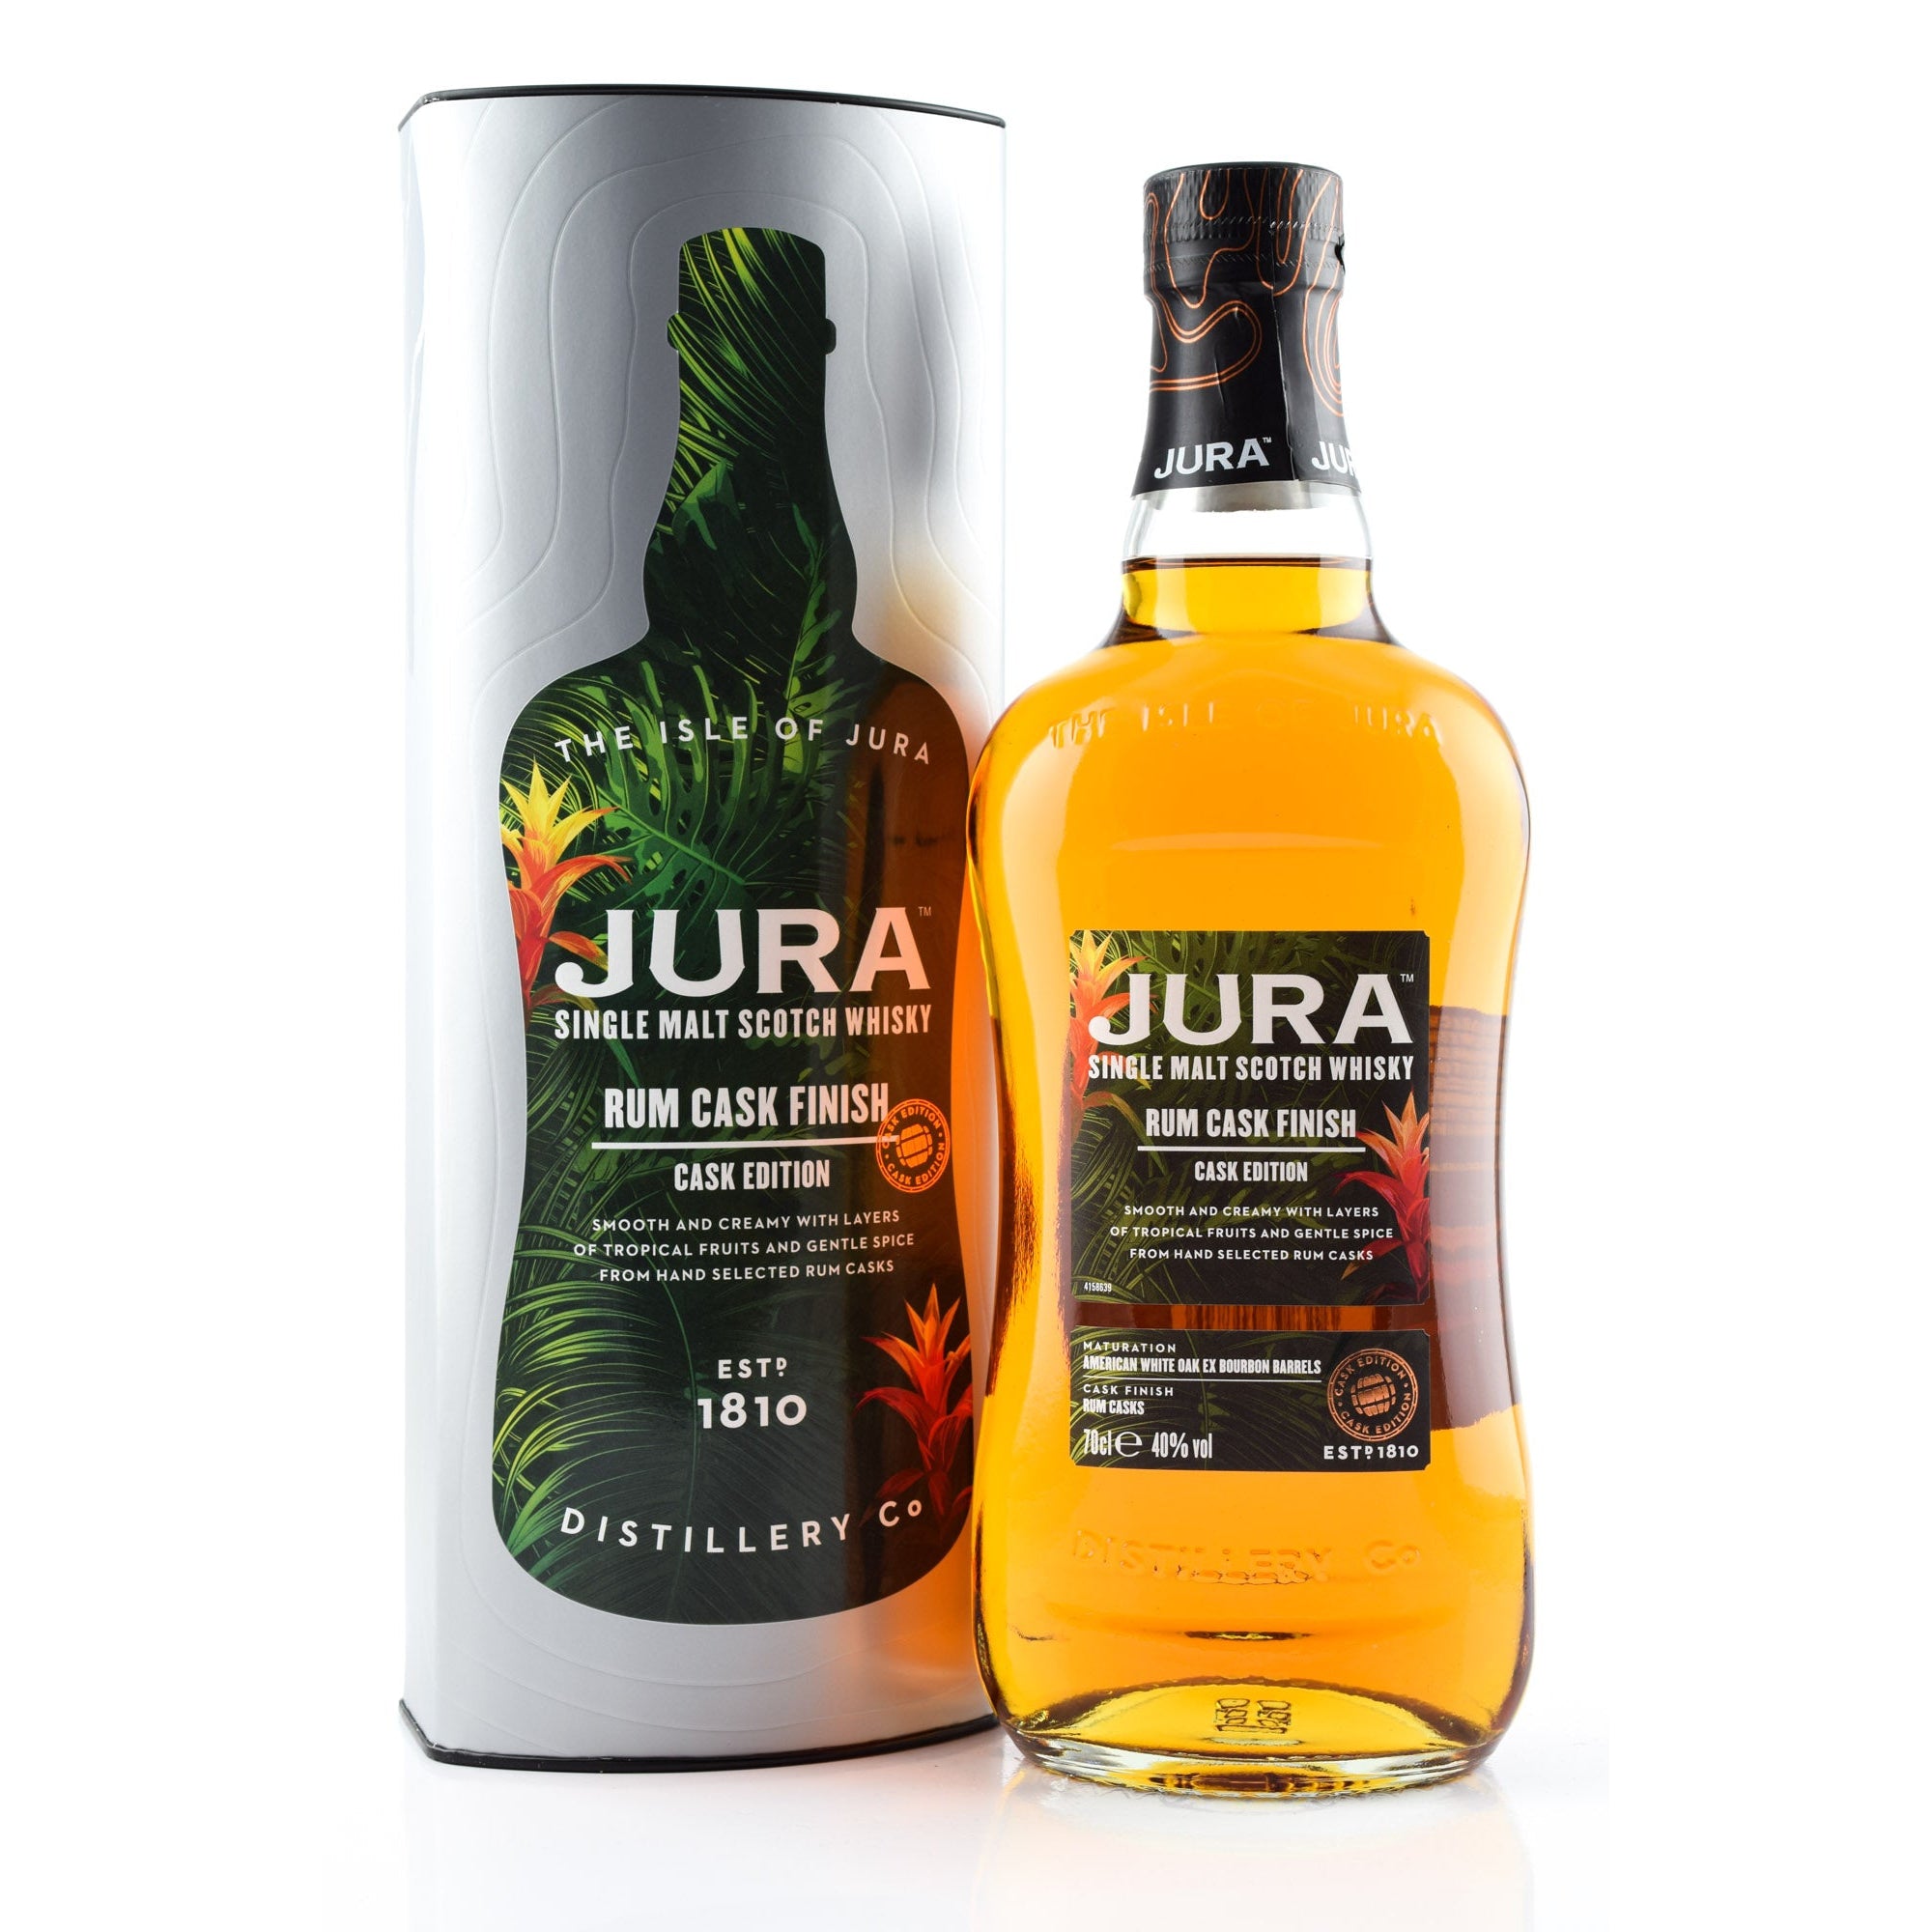 Jura Single Malt Scotch Whisky RUM CASK Finish 40% Vol. 0,7l in Giftbox